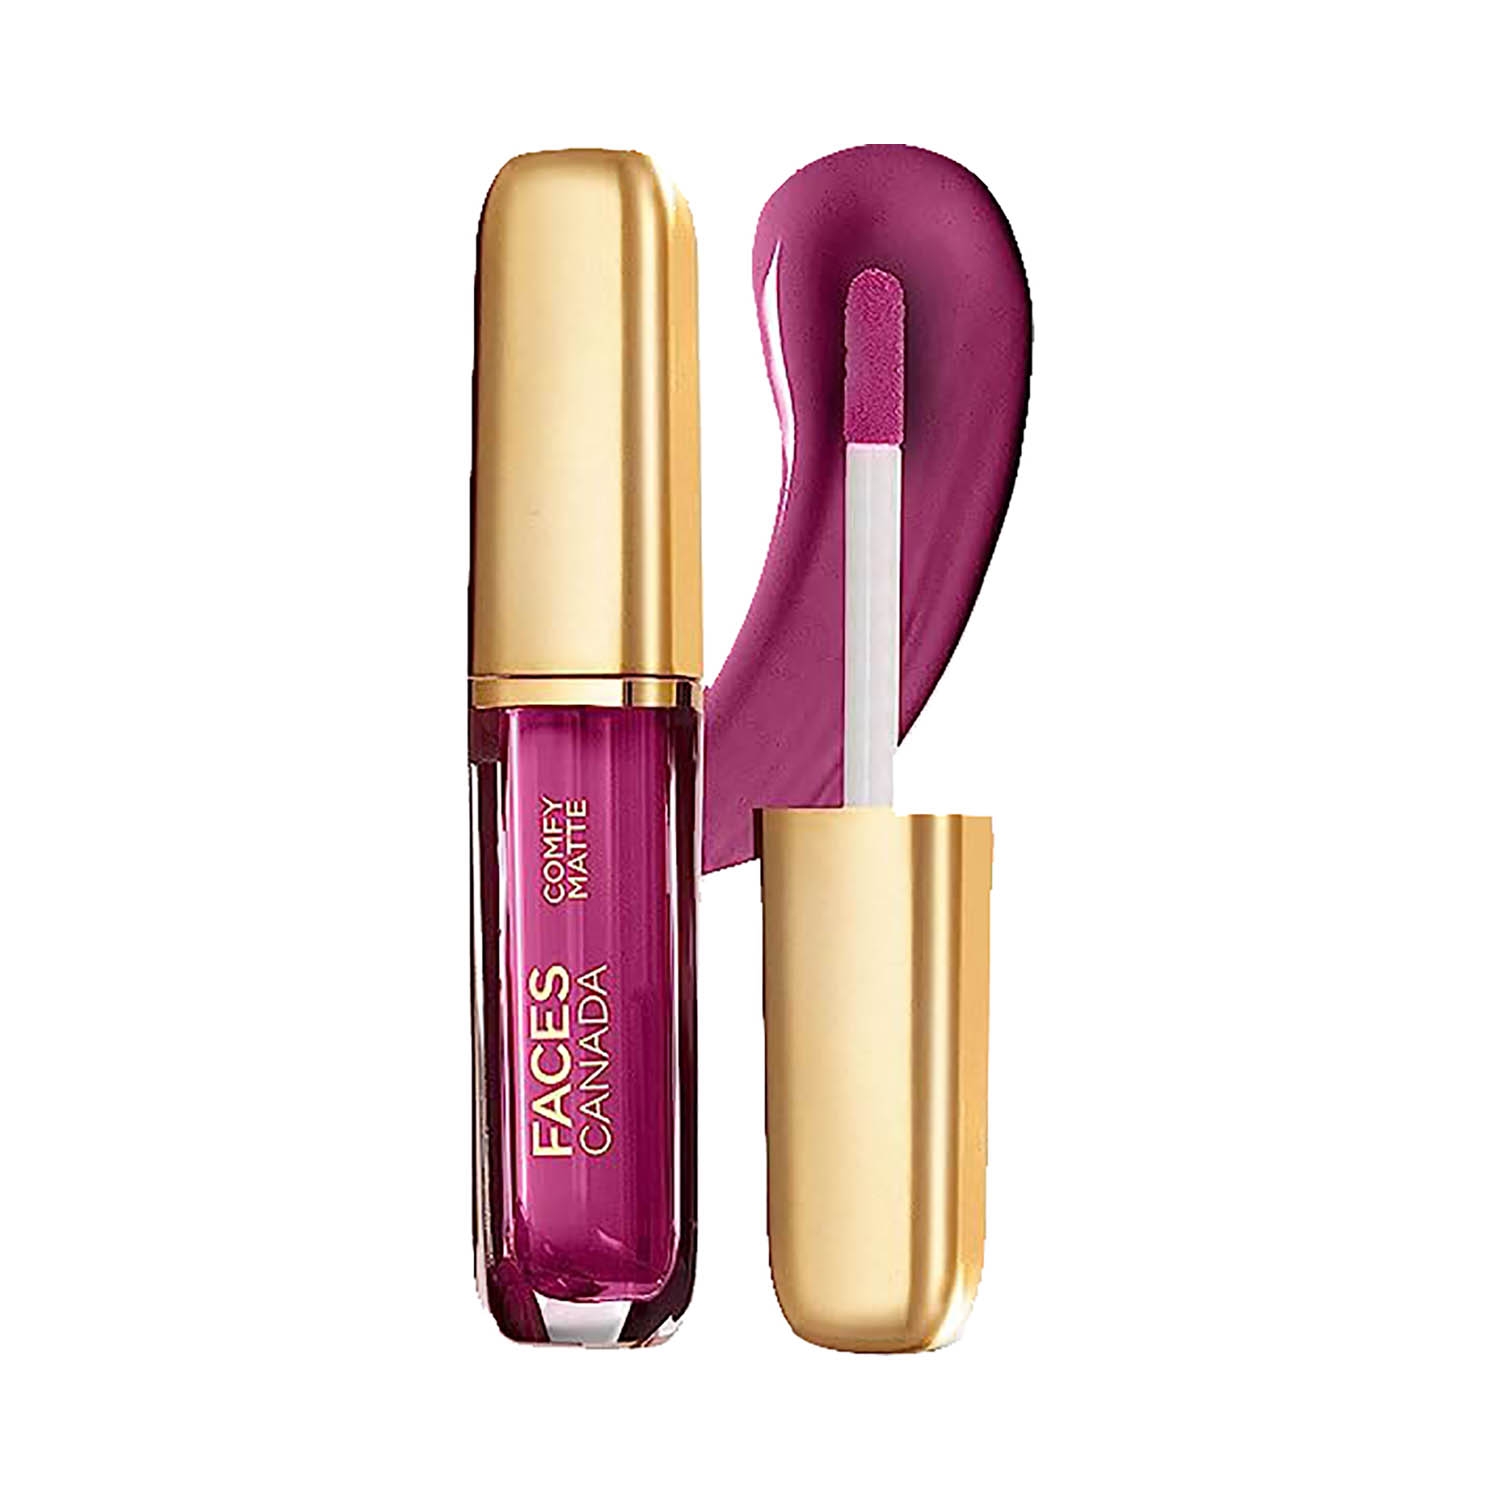 New Faces Canada Comfy Silk Liquid Lipstick Review  &Swatches#review#facescanada #newlaunch#lipstick 